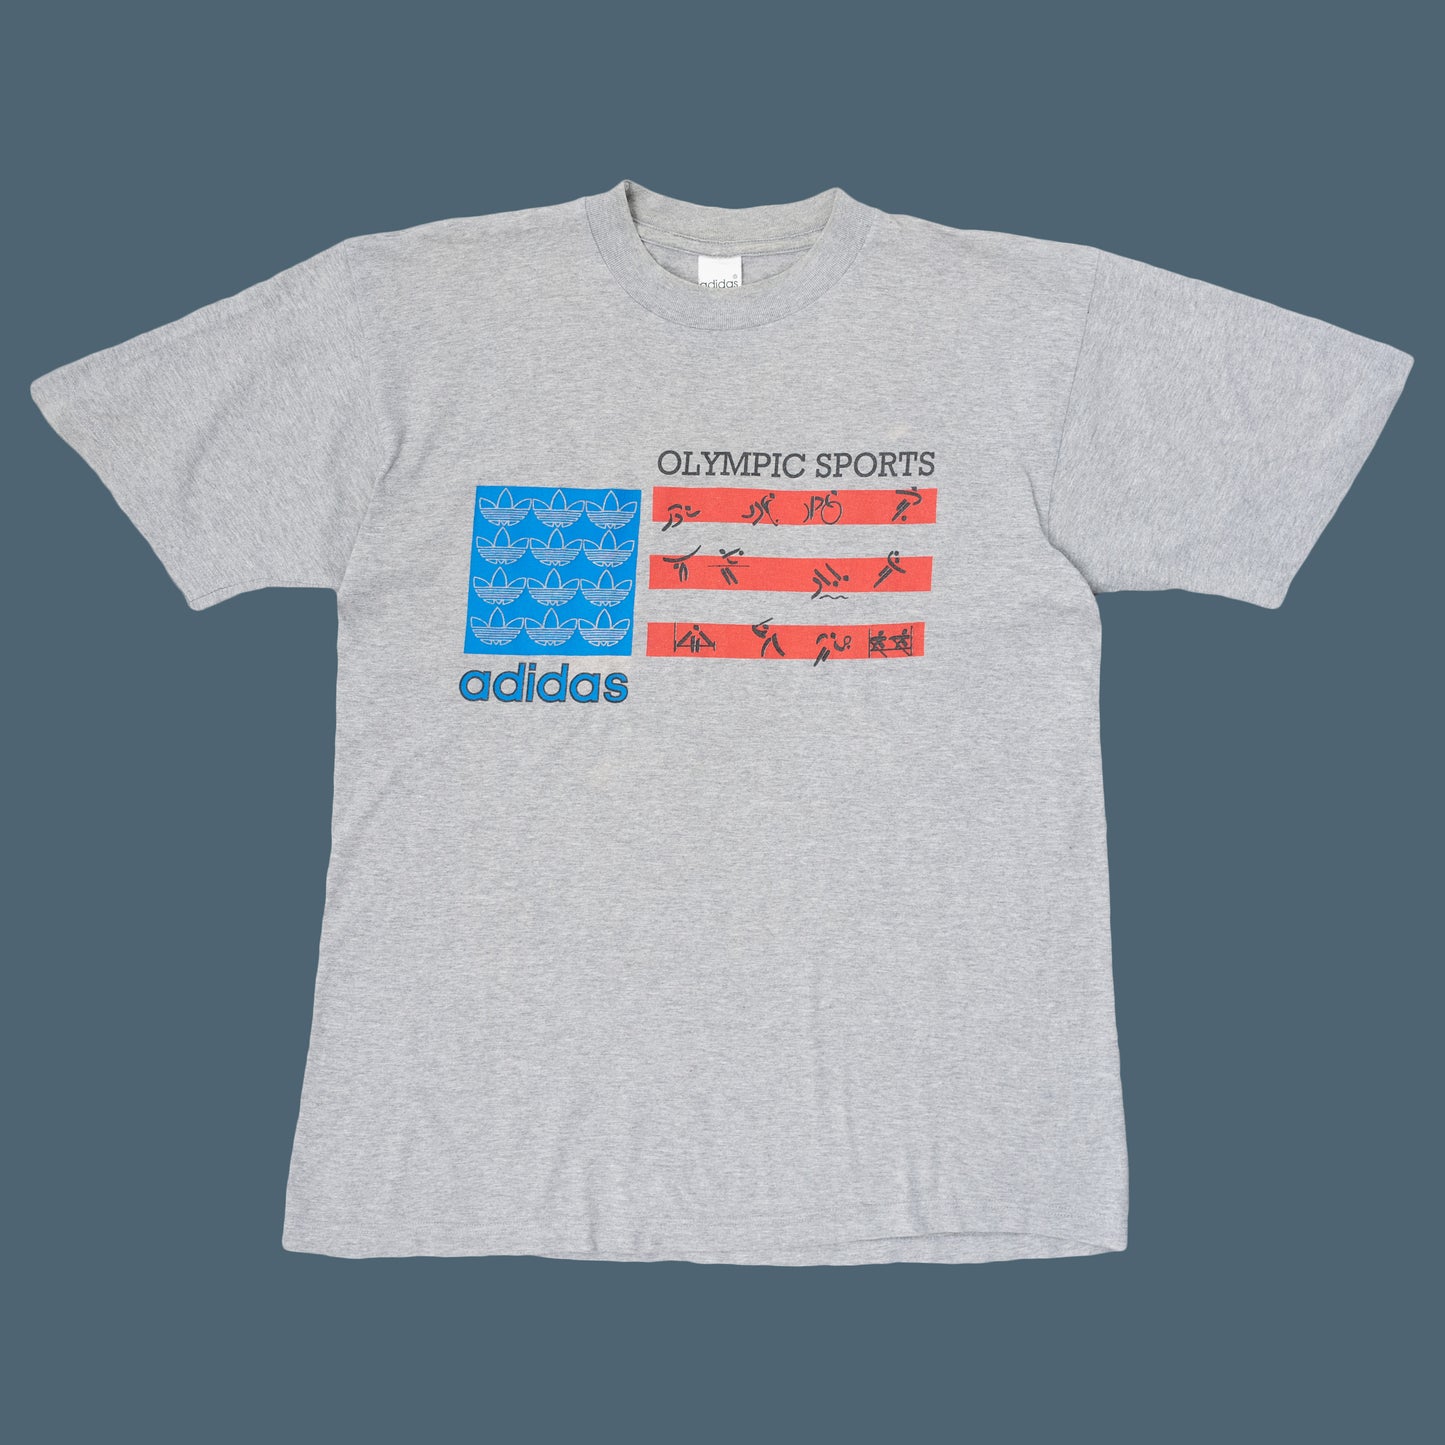 Adidas Olympic Sports USA T Shirt, M